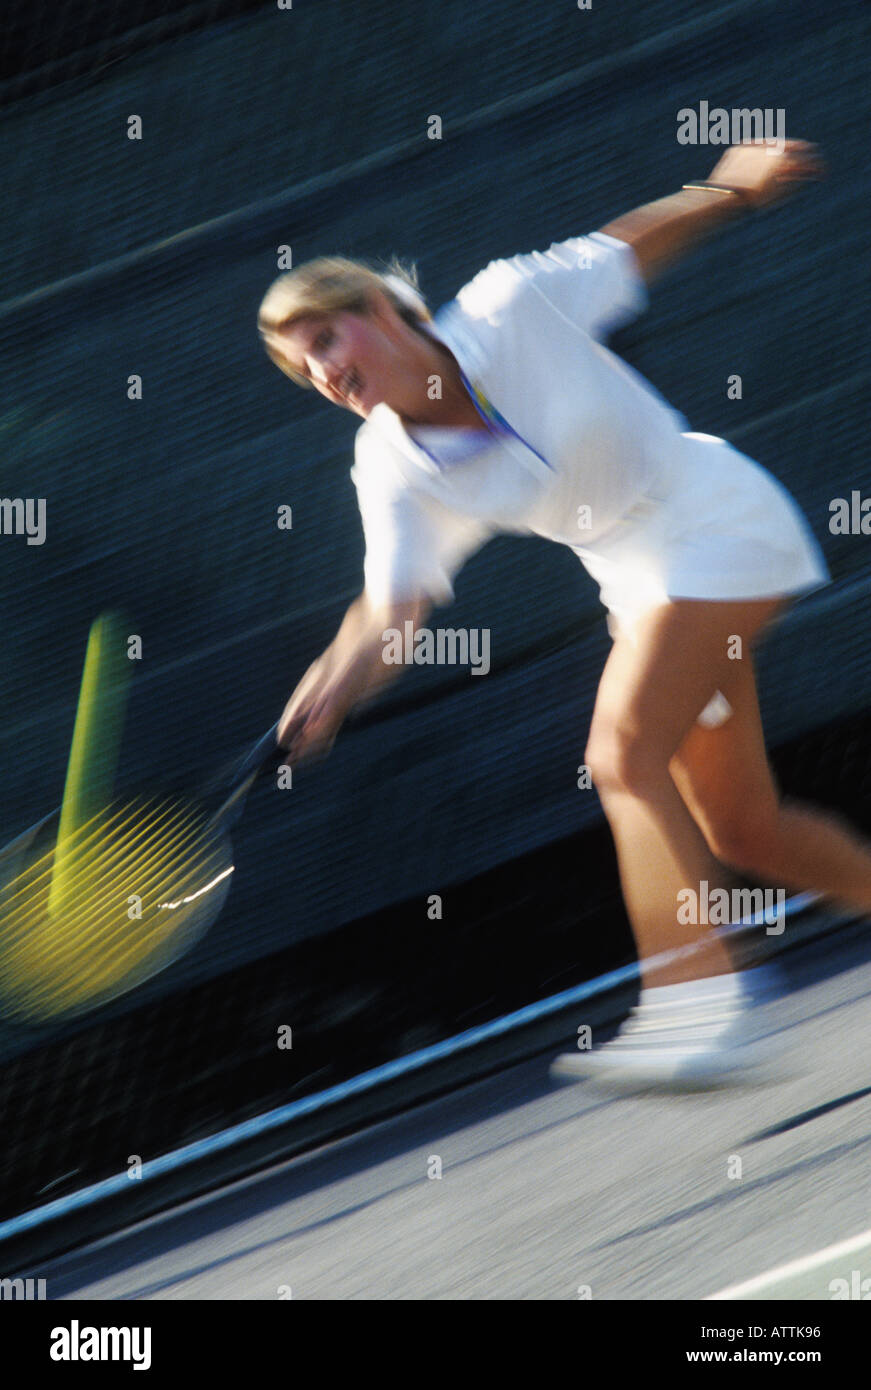 Young woman hitting a tennis ball Stock Photo